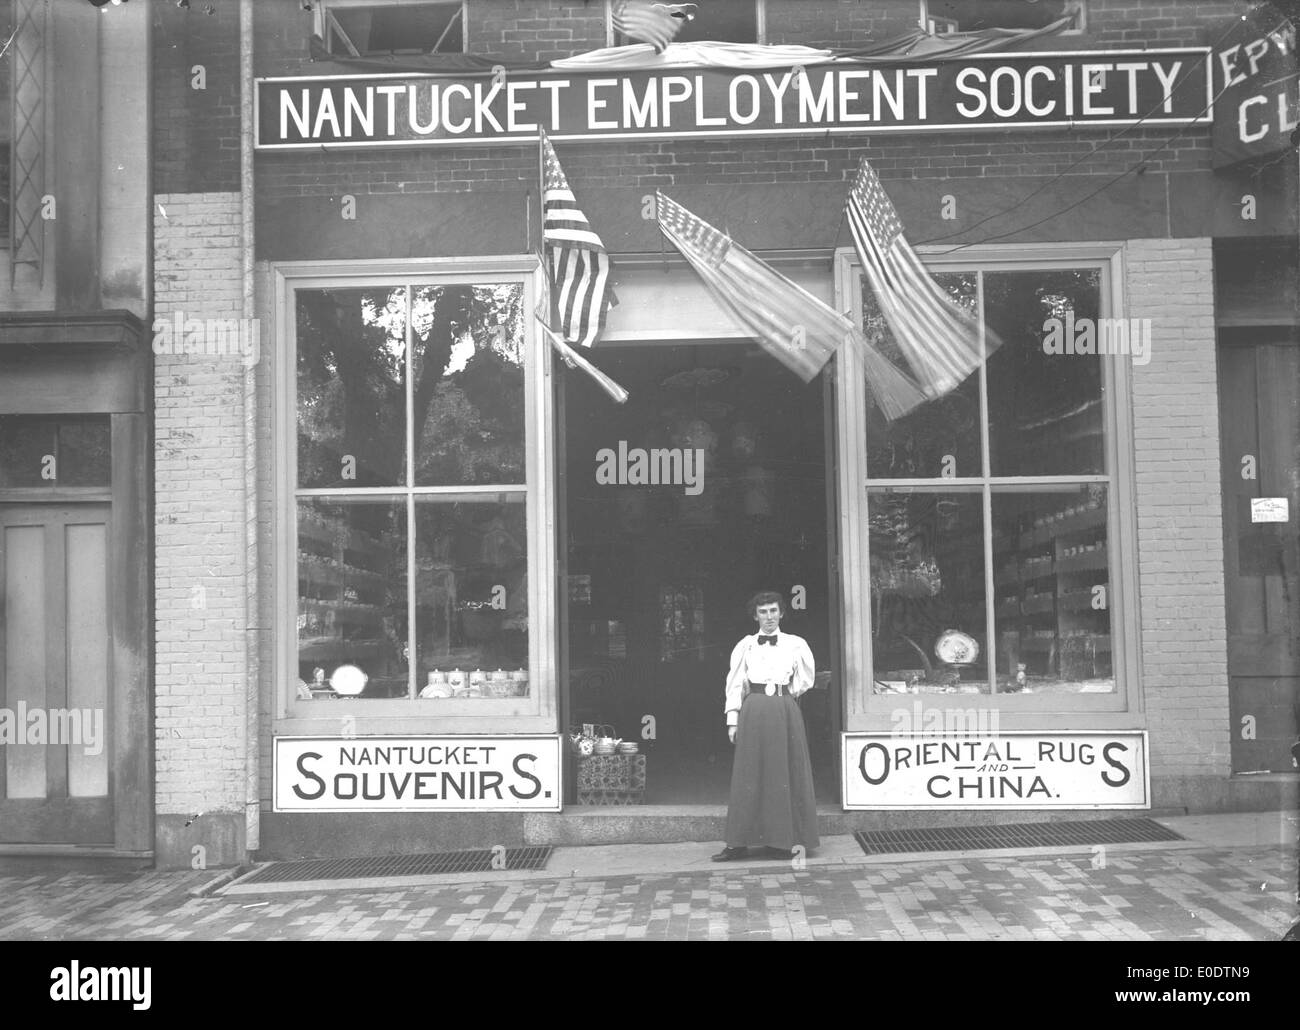 Nantucket Employment Society Stock Photo